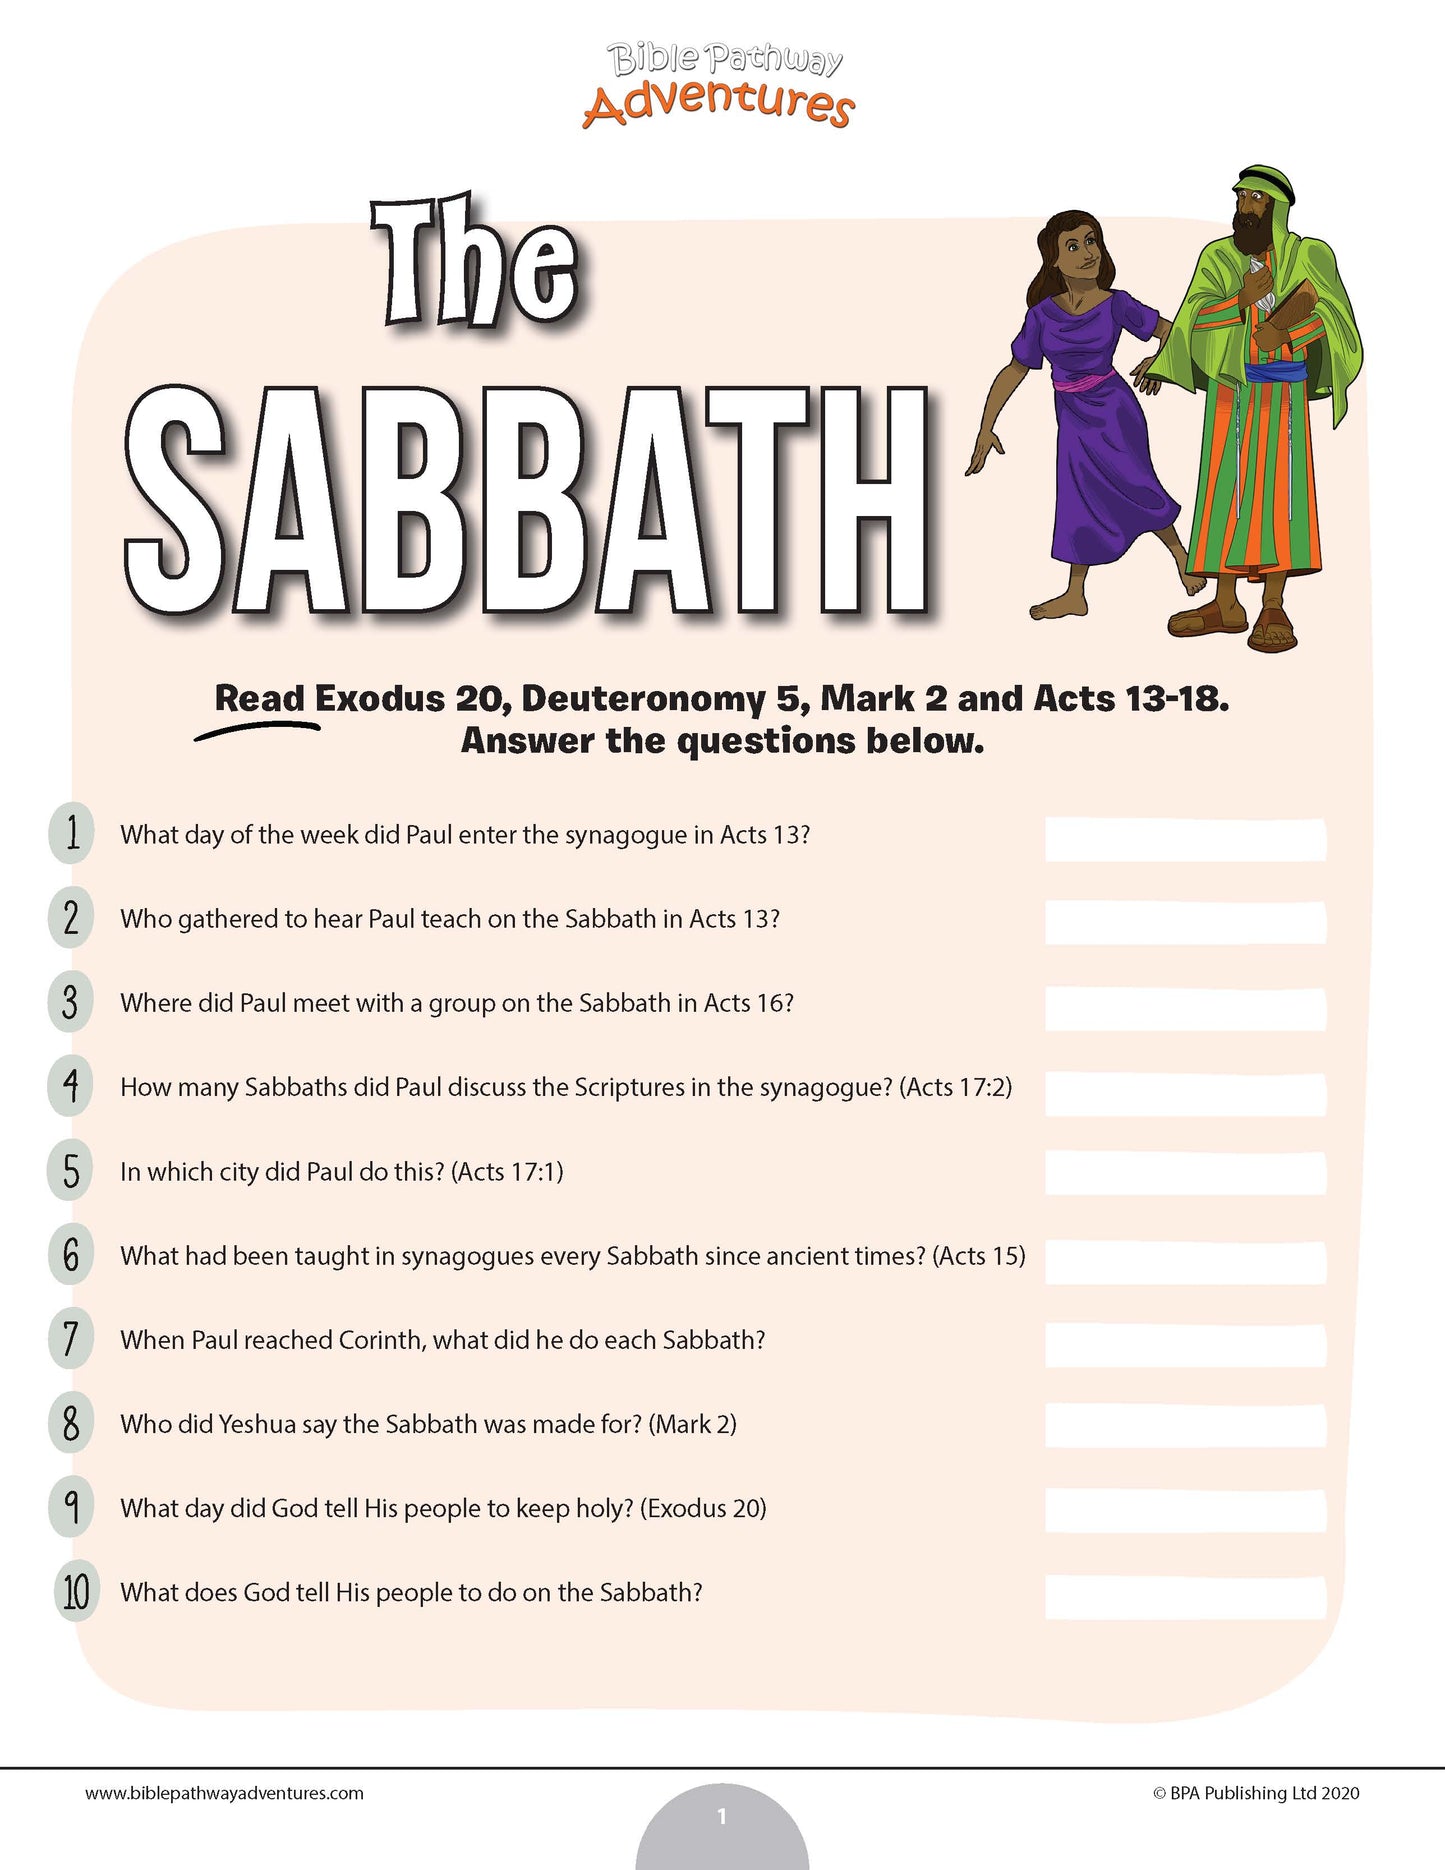 The Sabbath quiz